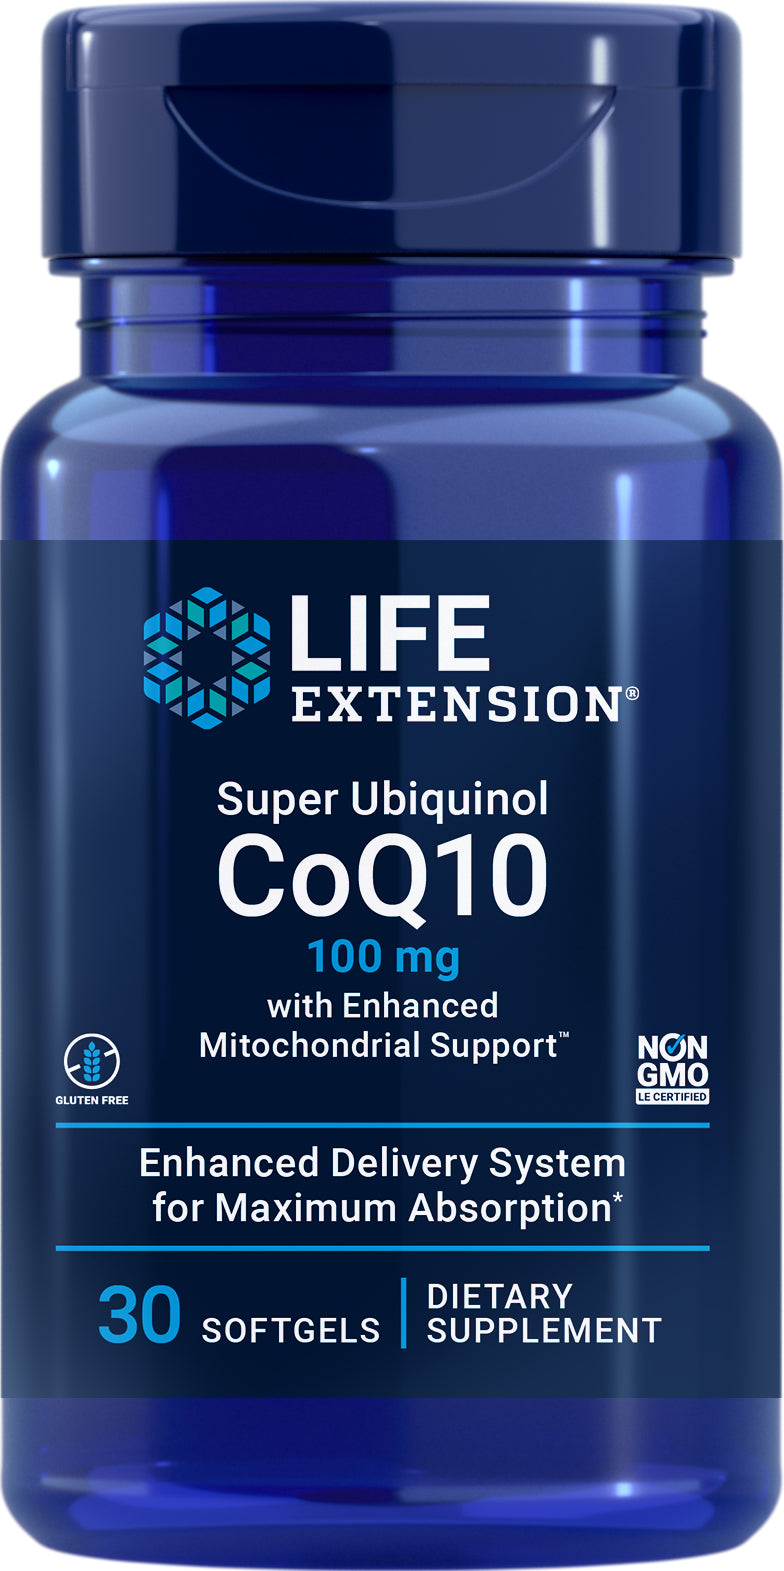 Super Ubiquinol CoQ10 W/ Enhanced Mitochondrial Support™100 mg, 30 softgels By Life Extension